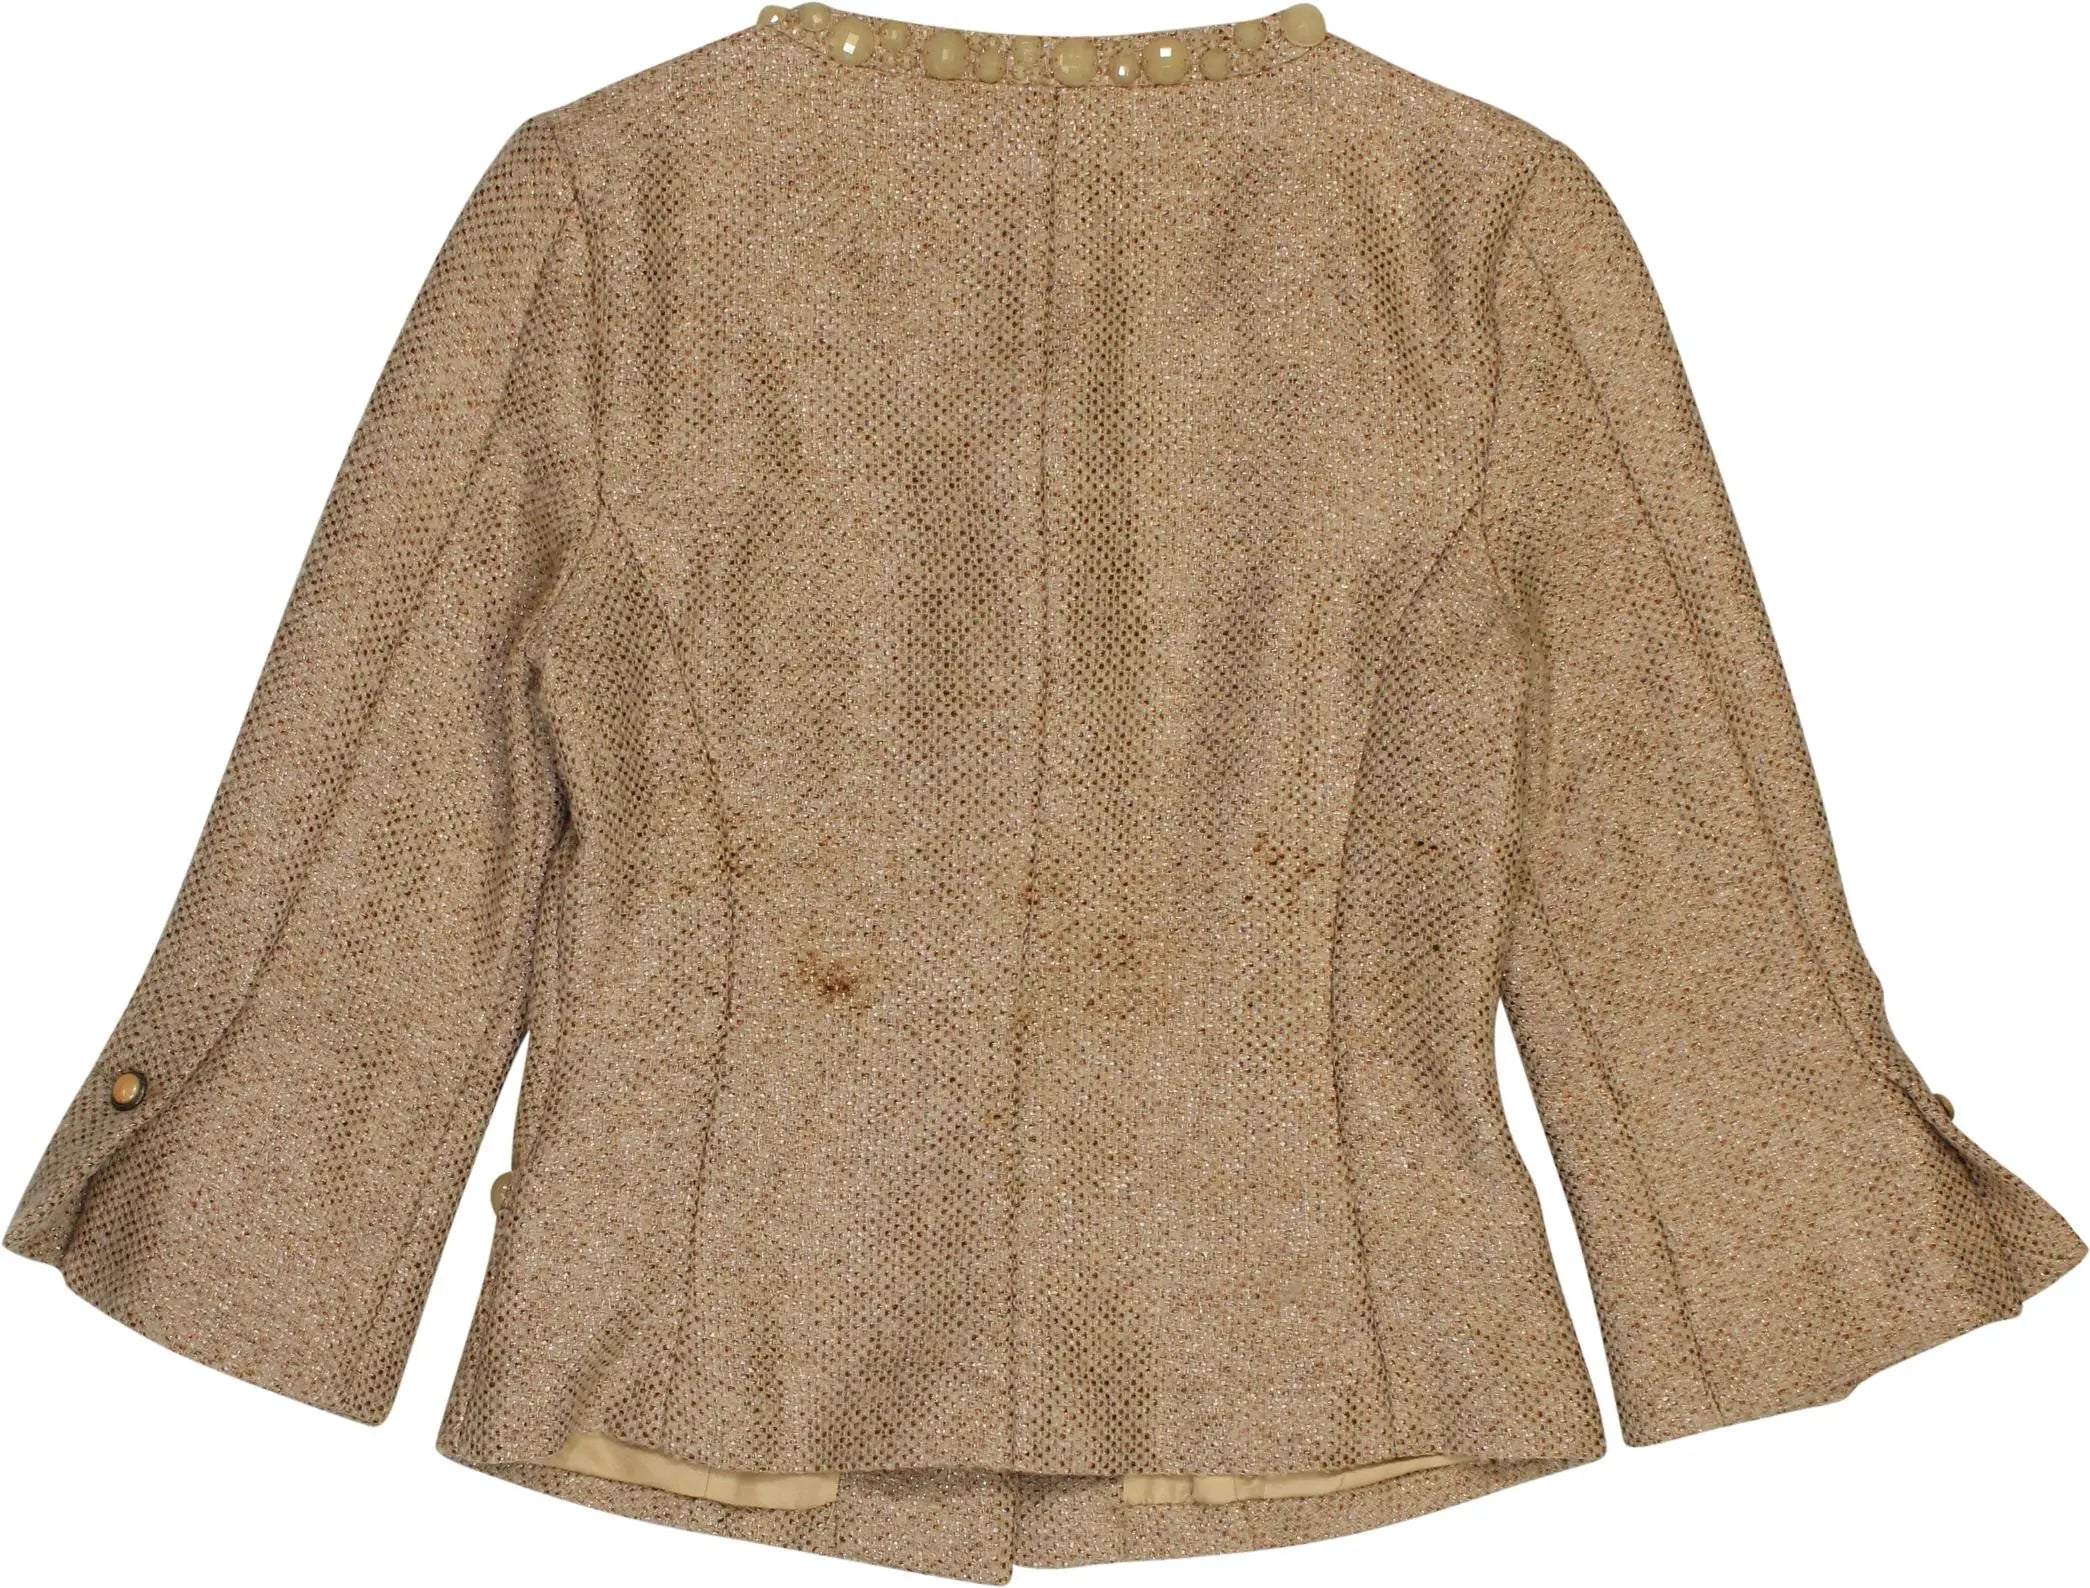 Supertrash - Tweed Blazer- ThriftTale.com - Vintage and second handclothing